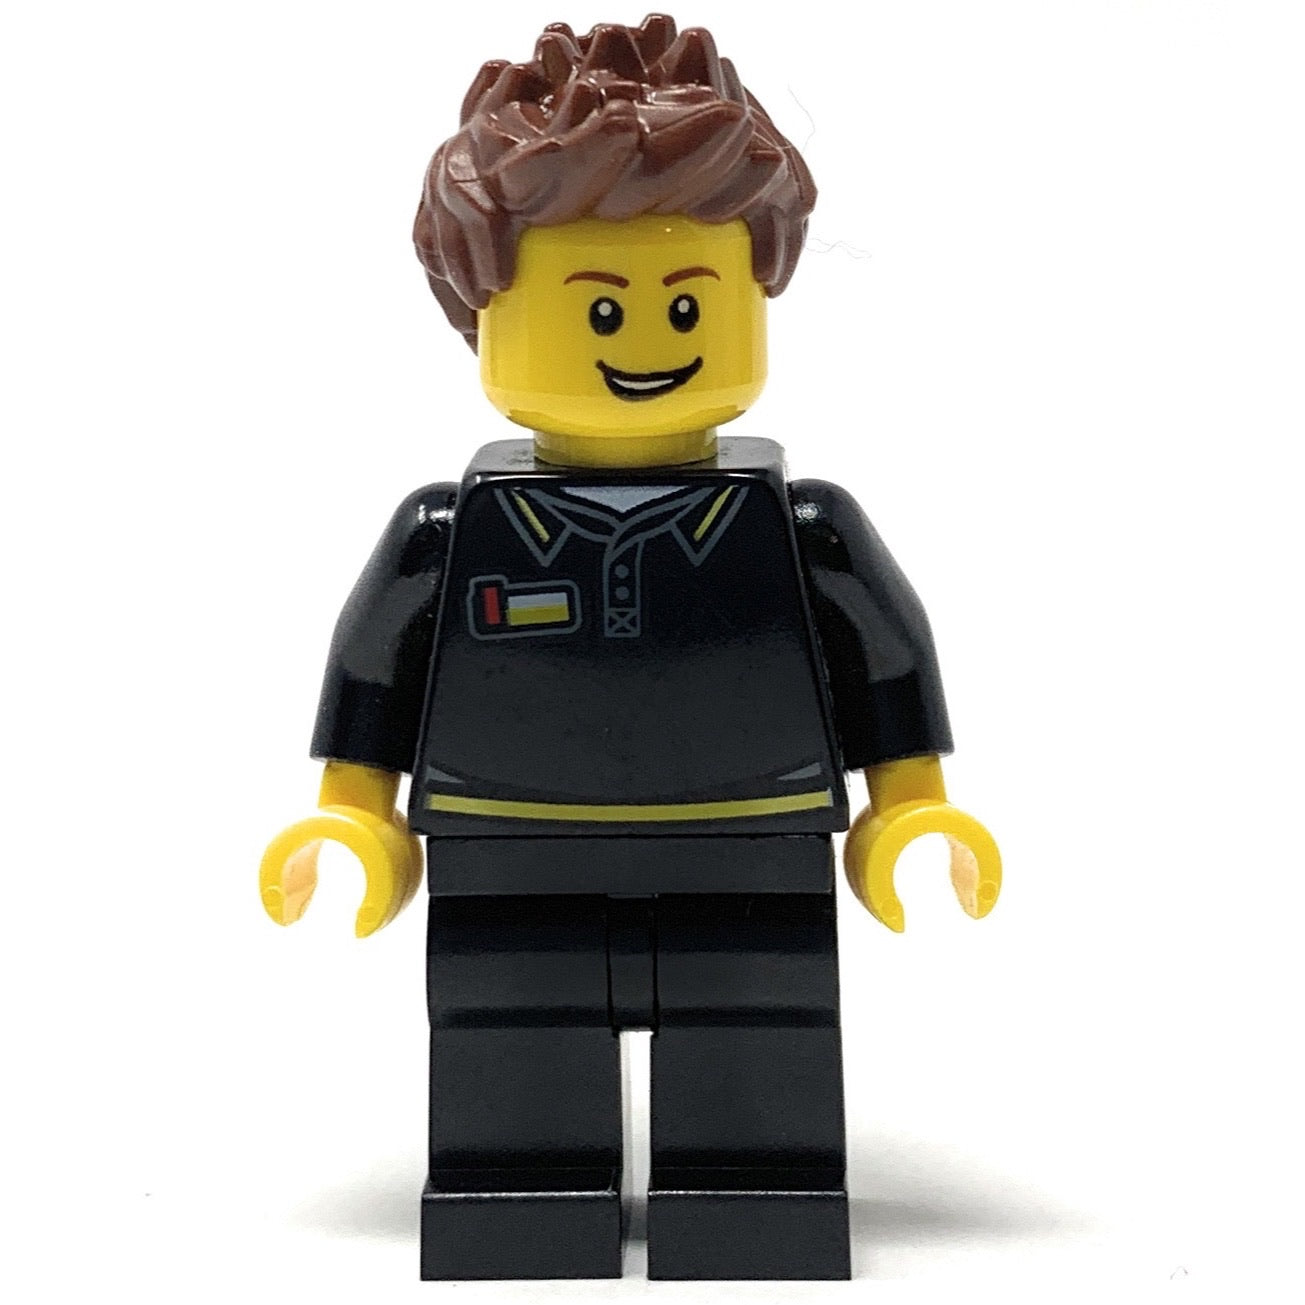 LEGO Employee - Official LEGO City Minifigure (2017) – The Brick Show Shop